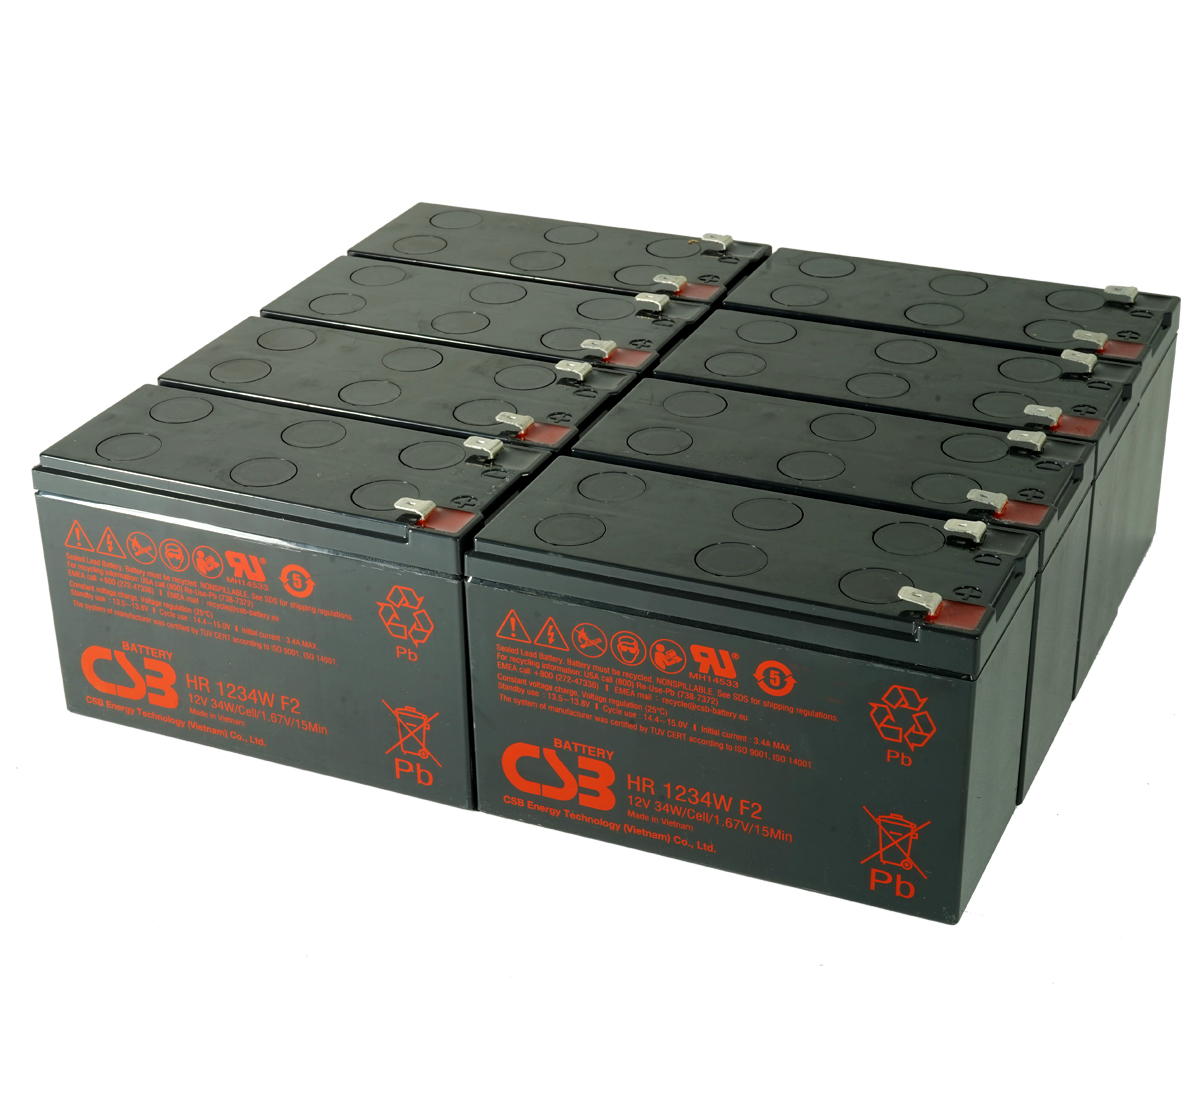 MDS68780 UPS Battery Kit for MGE / Eaton UPS